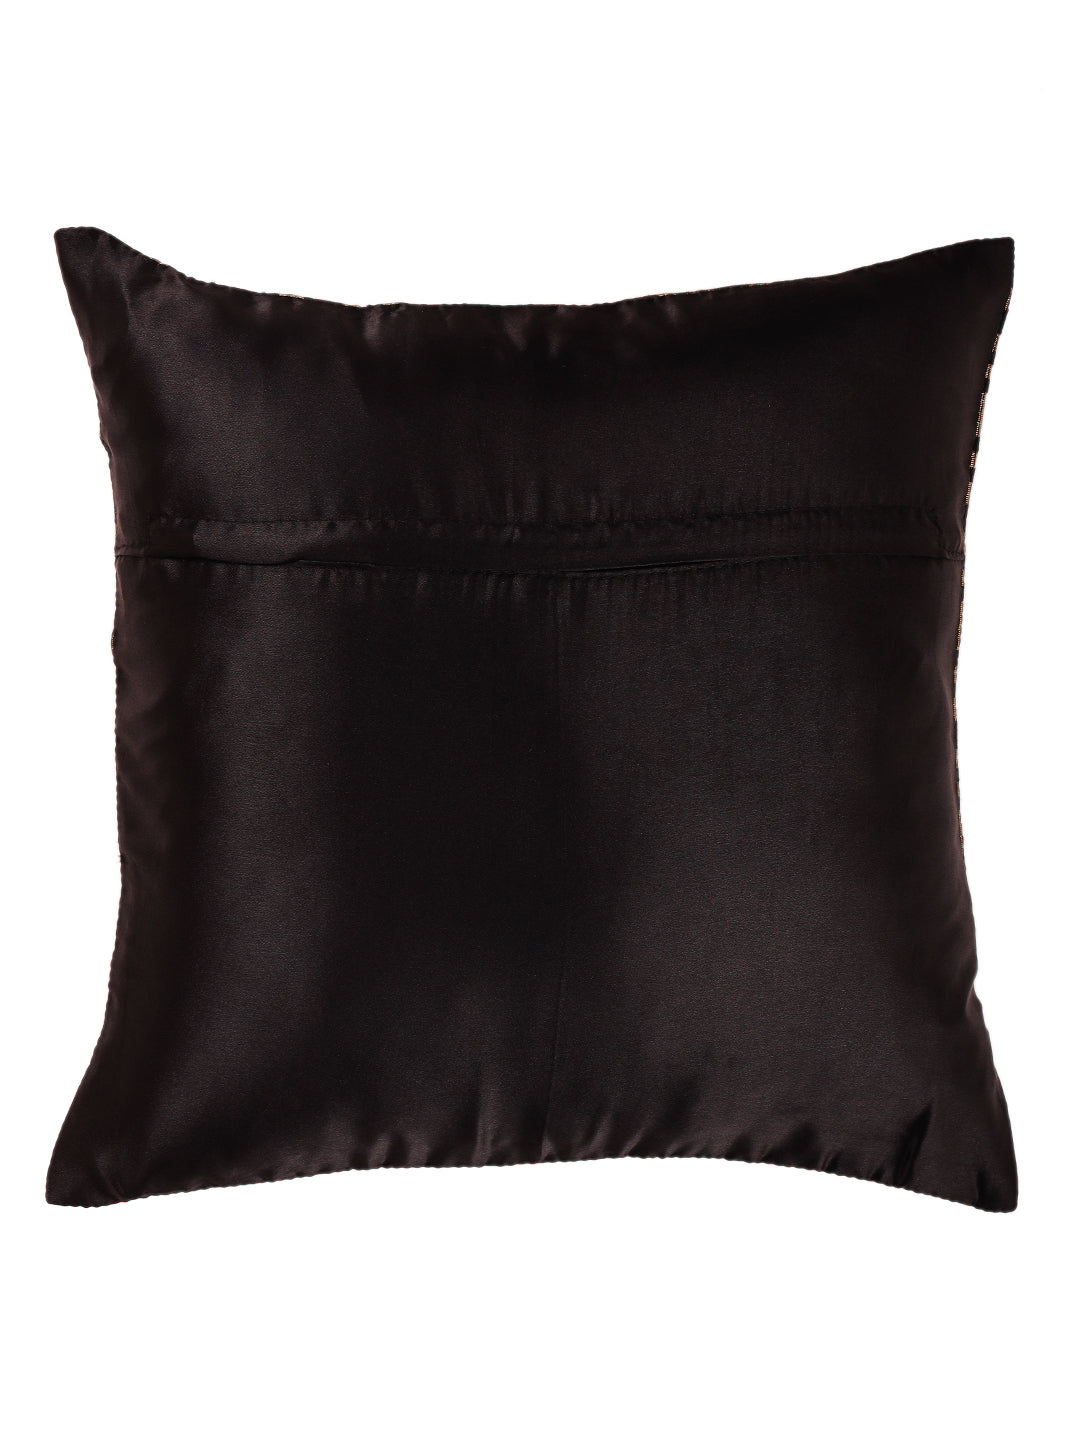 Silkfab Set 0f 5 Decorative Silk Cushion Covers (16x16) Circle Black - SILKFAB